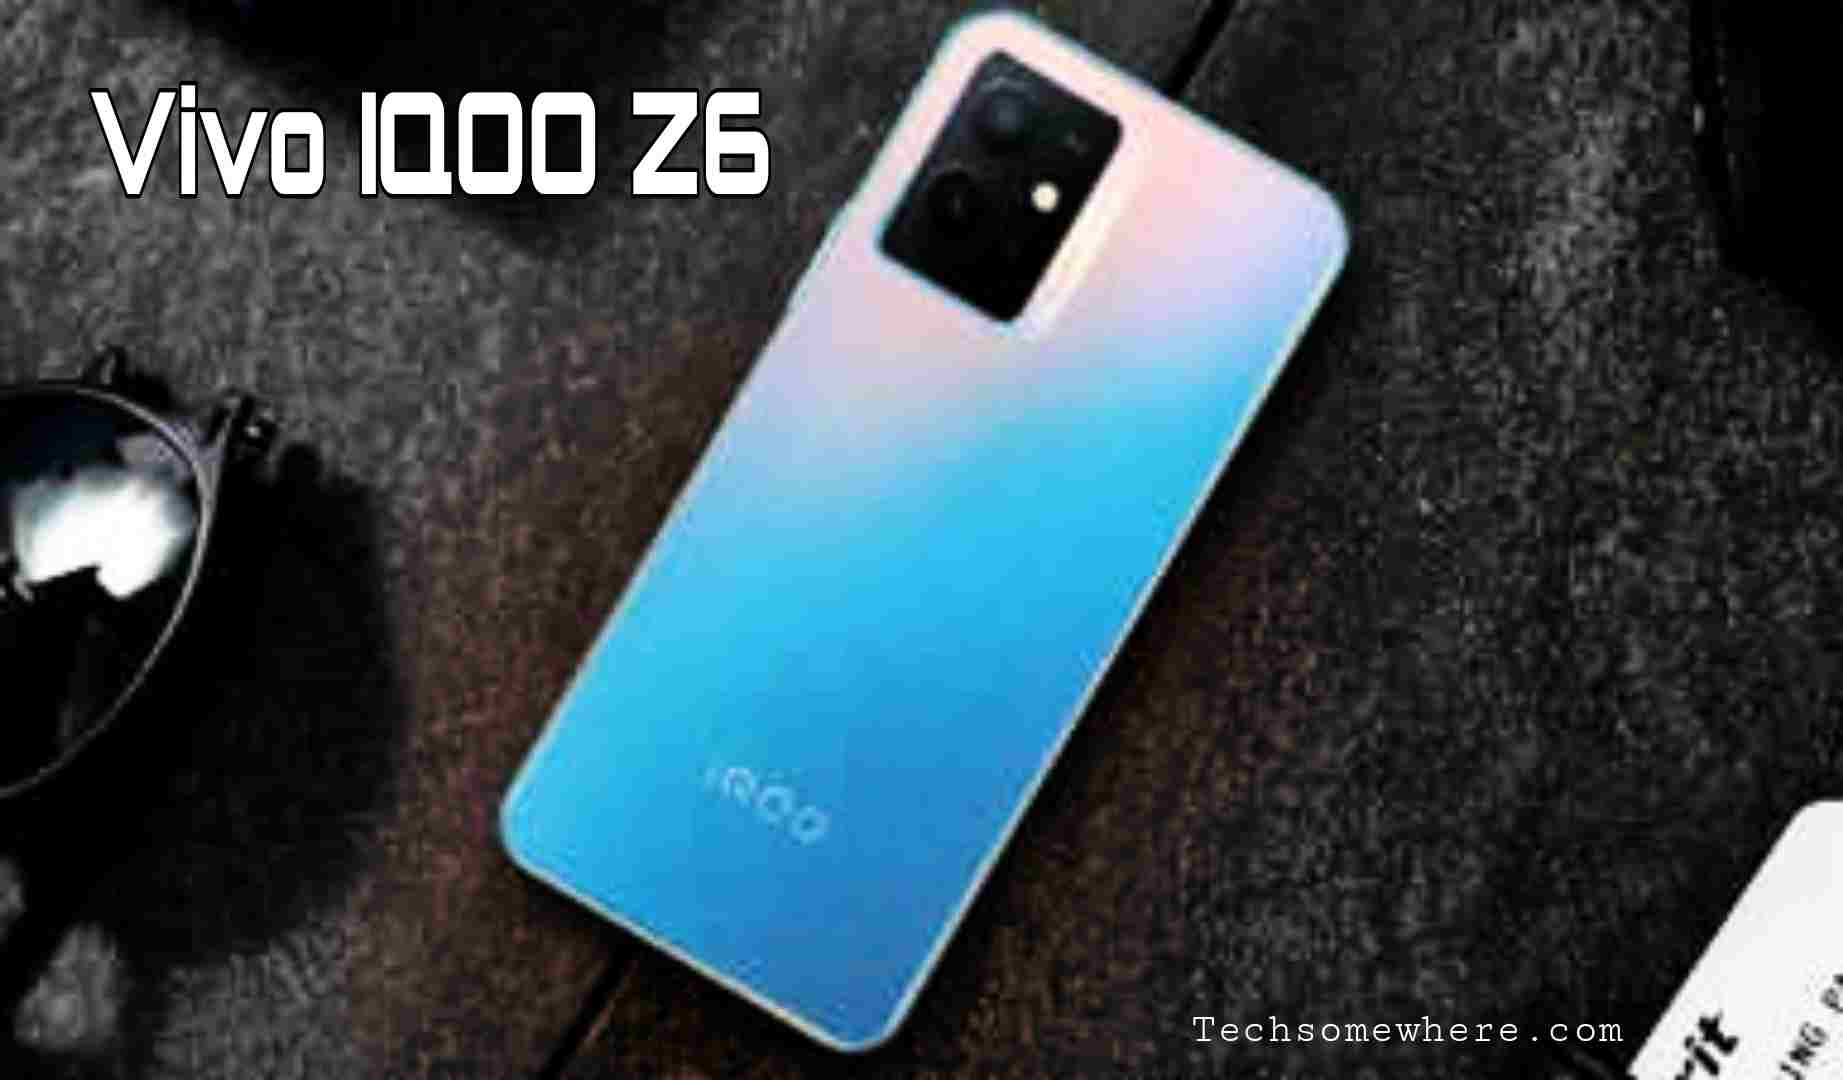 The Vivo IQOO Z6 - Price, Interesting Specs & Release Date!